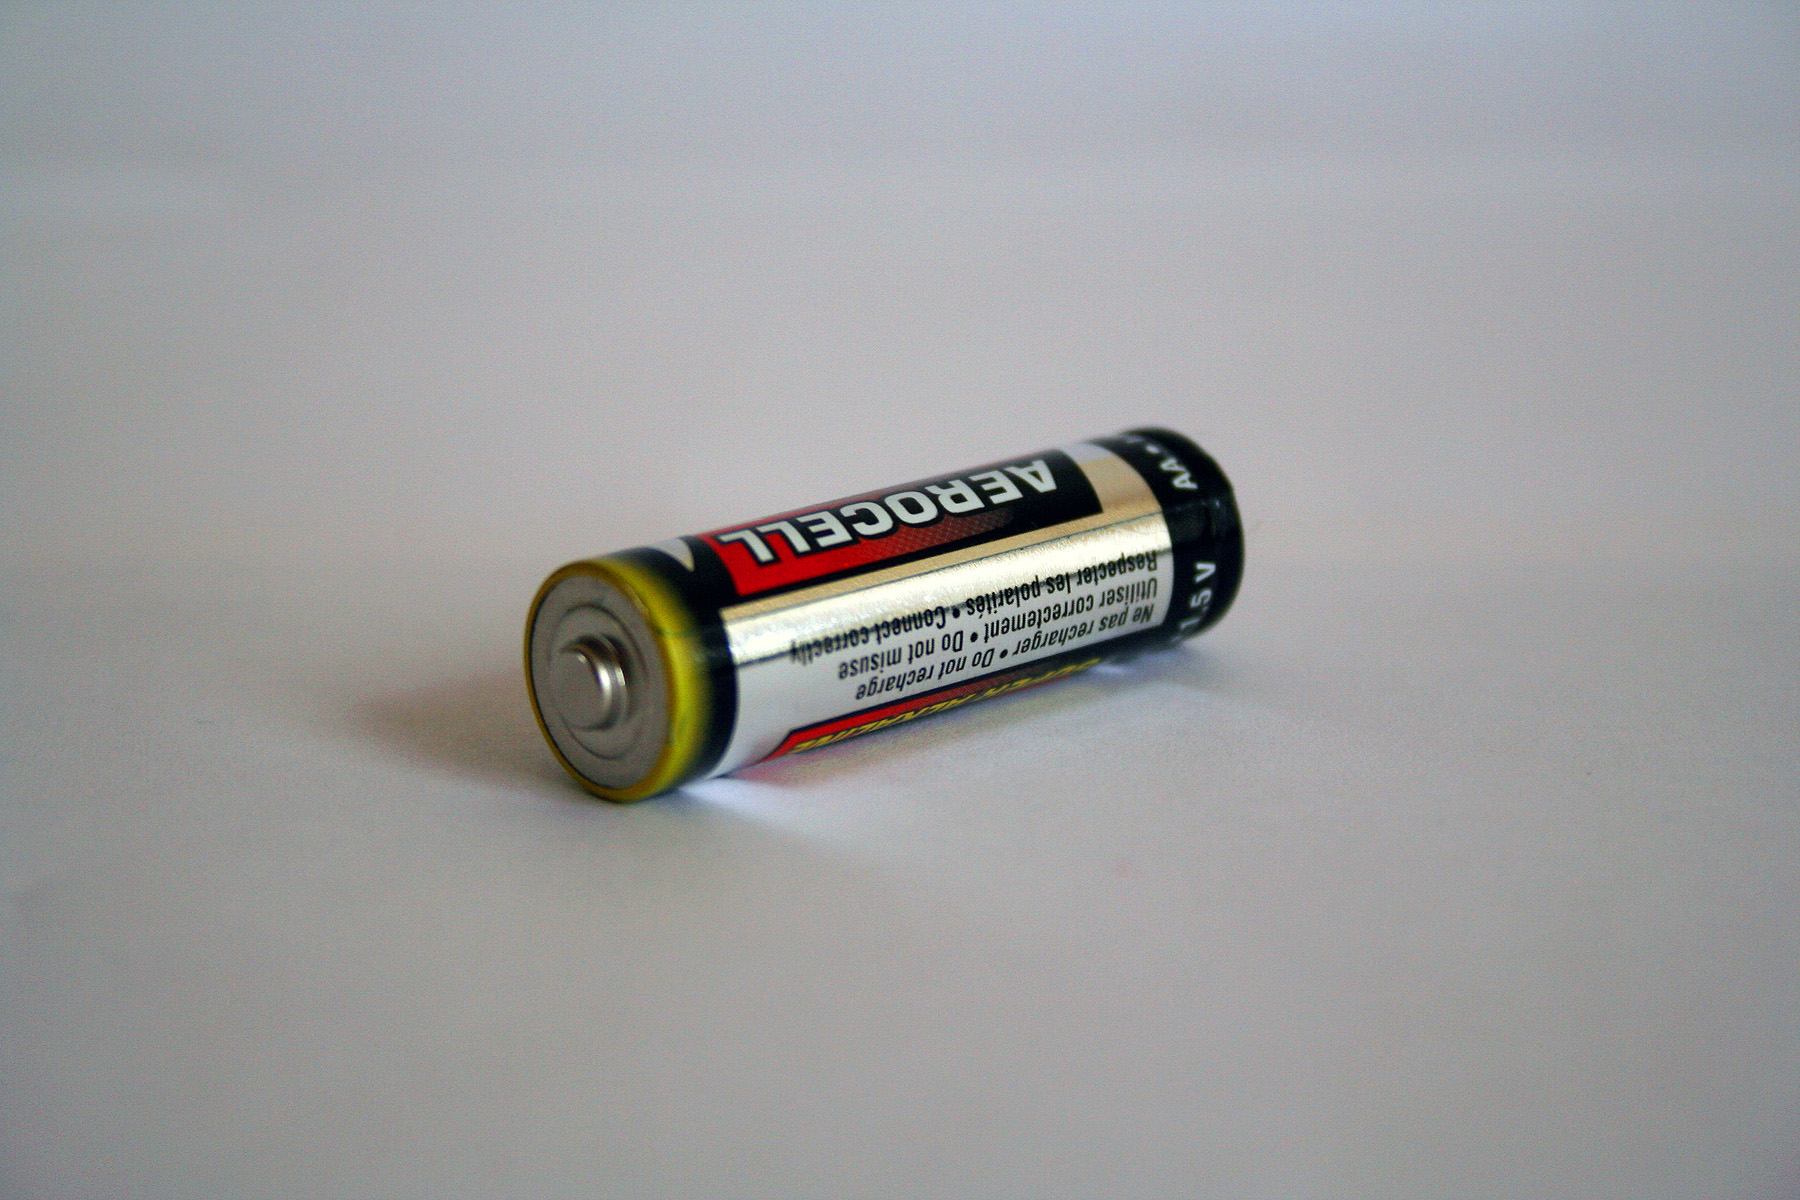 Battery photo